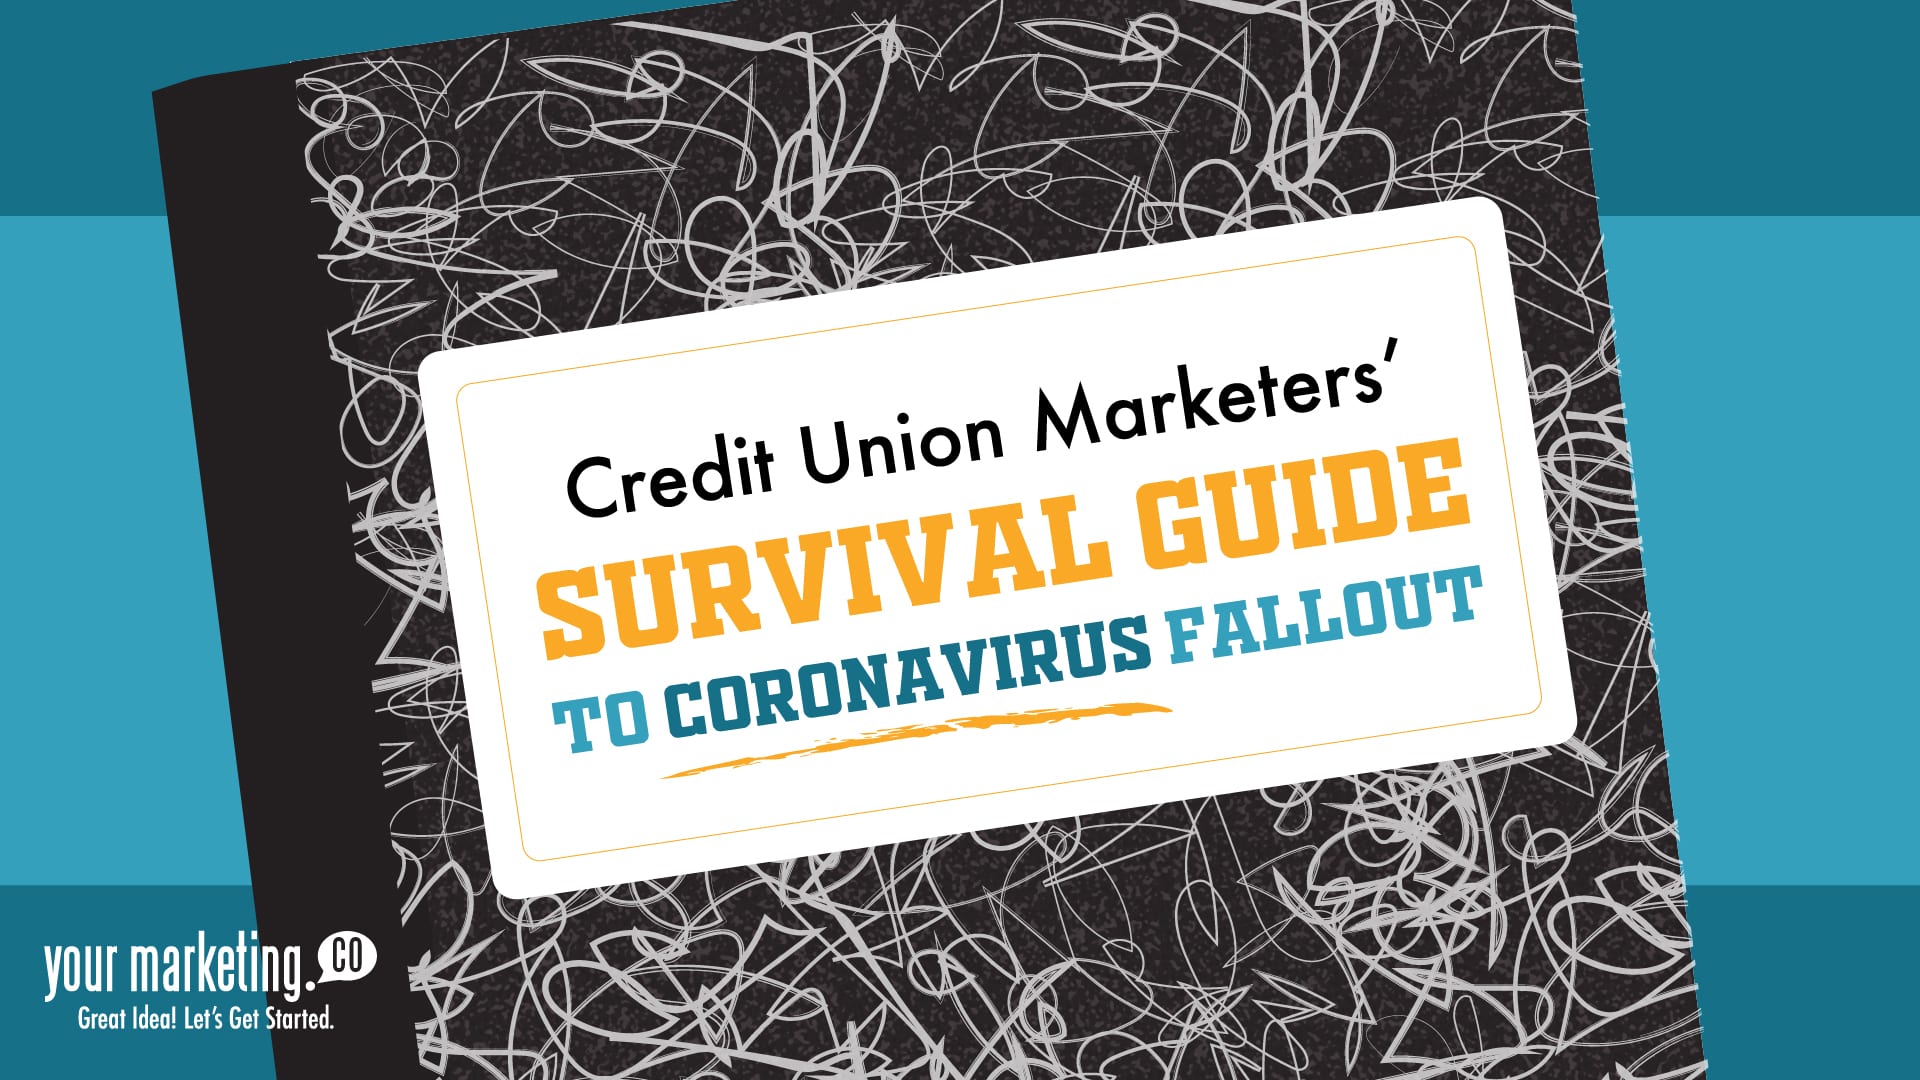 Credit Union Marketers’ Survival Guide to Coronavirus Fallout